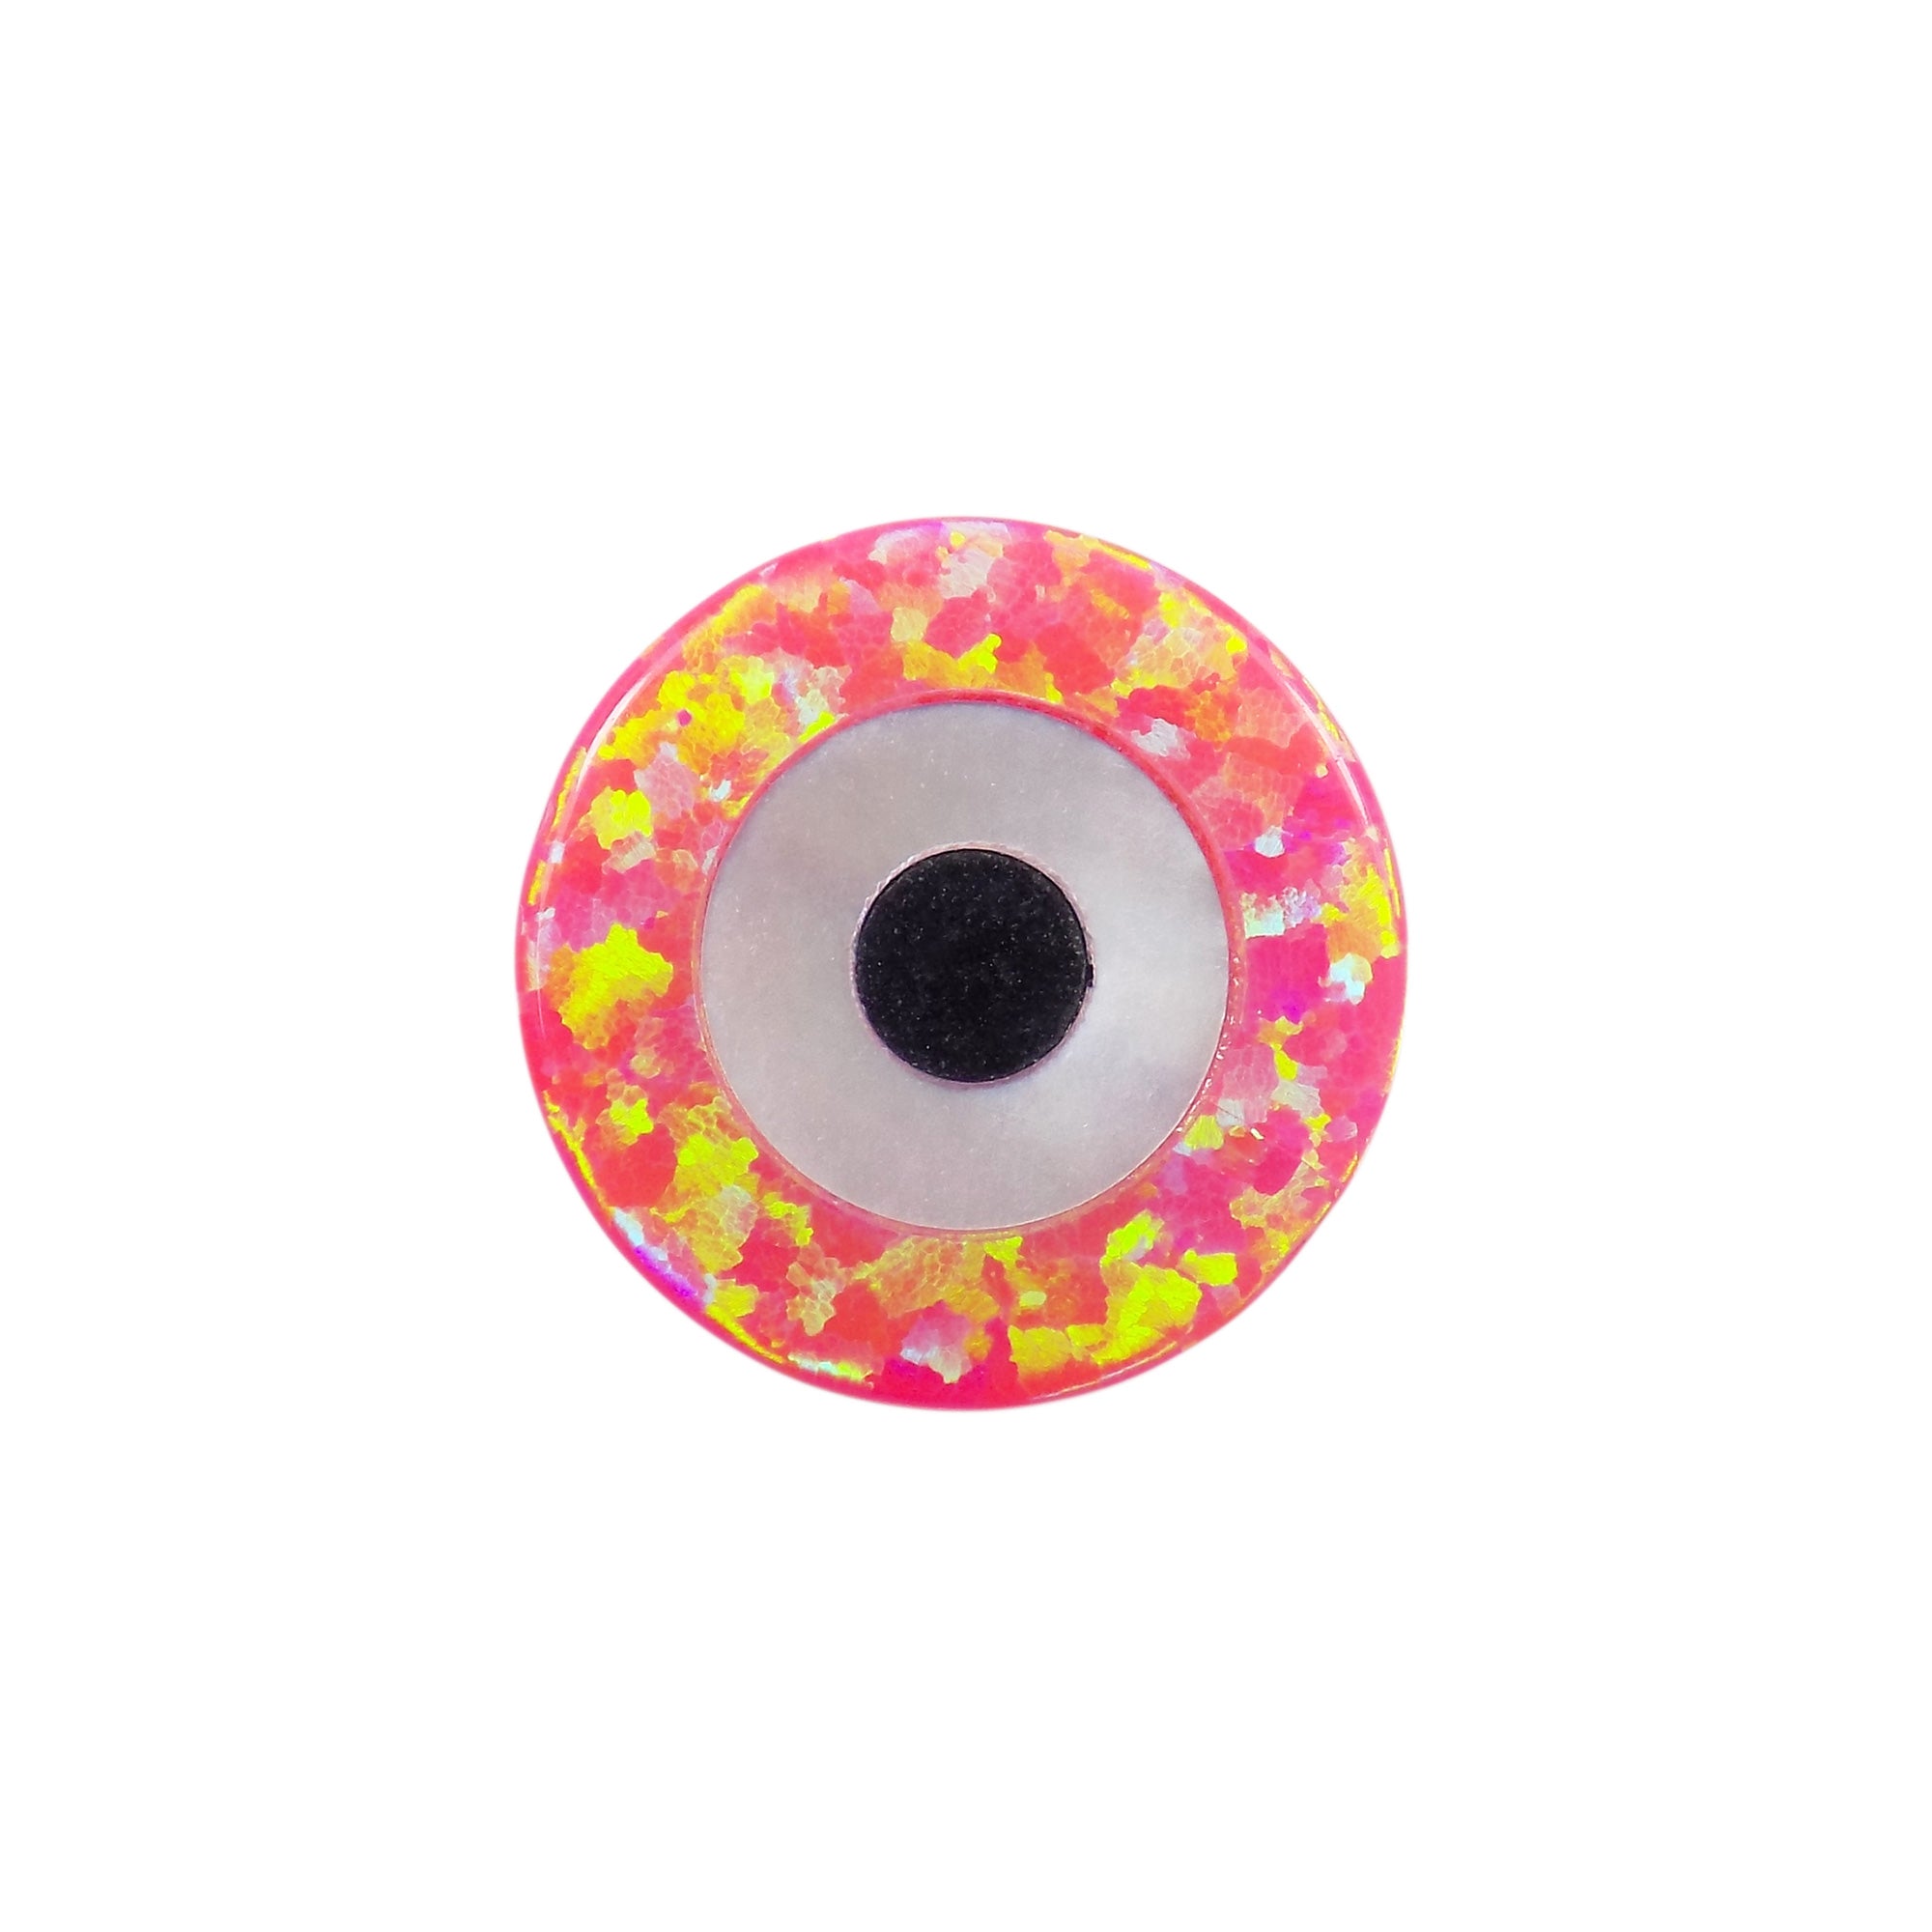 50 100 Pcs Light Pink Evil Eye Beads ,resin Evil Eye Beads ,8mm ,10mm Light Pink  Beads for Jewelry Making 